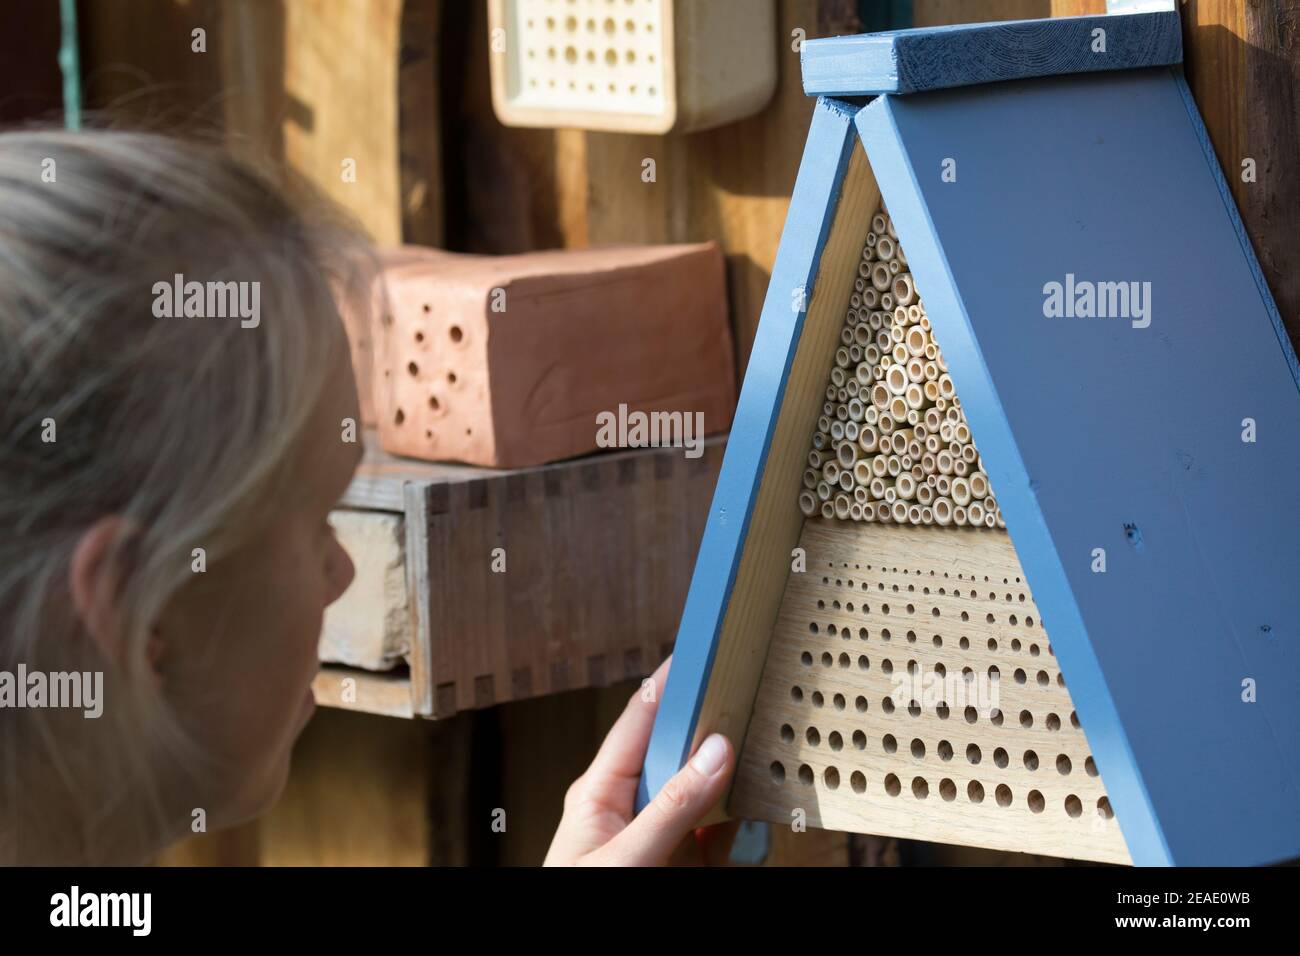 Beobachtung an Wildbienen-Nisthilfen, junge Frau beobachtet Wildbienen an Nisthilfen. Wildbienen-Nisthilfen, Wildbienen-Nisthilfe selbstmachen, selber Stockfoto